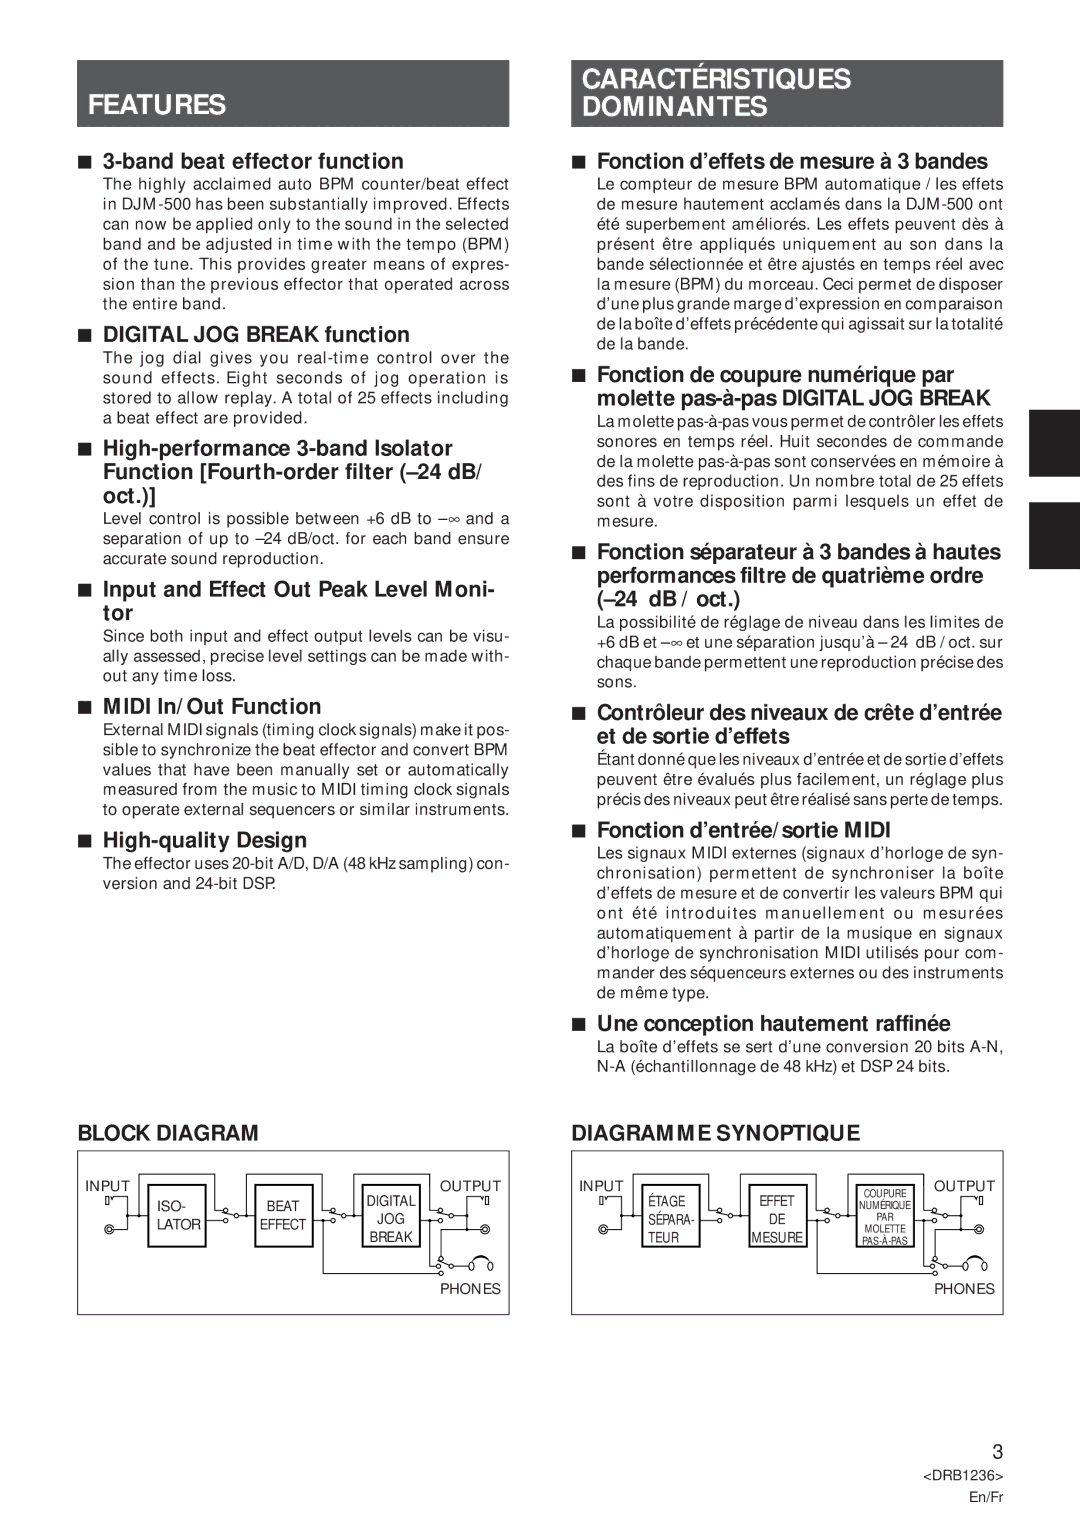 Pioneer Efx-500 operating instructions Features, Caractéristiques Dominantes, Block Diagram, Diagramme Synoptique 